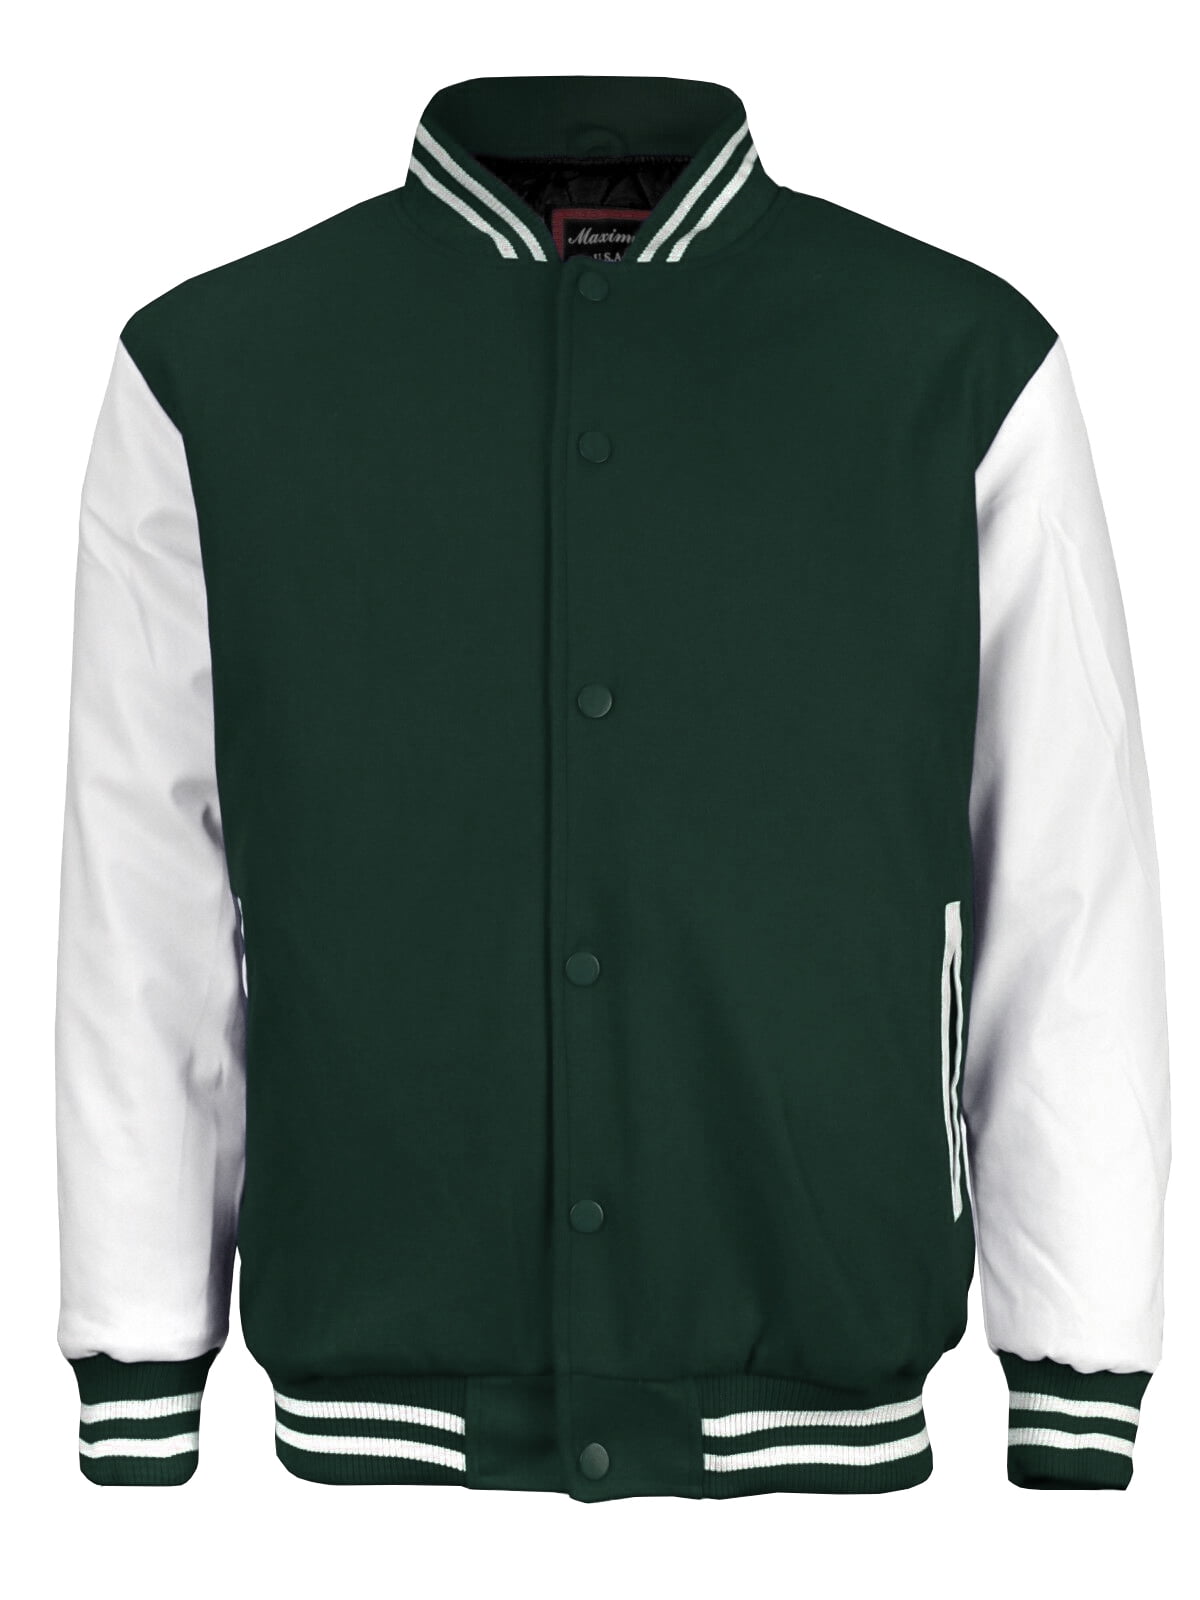 Baseball Green & Cream Letterman Jacket – The Vintage Leopard